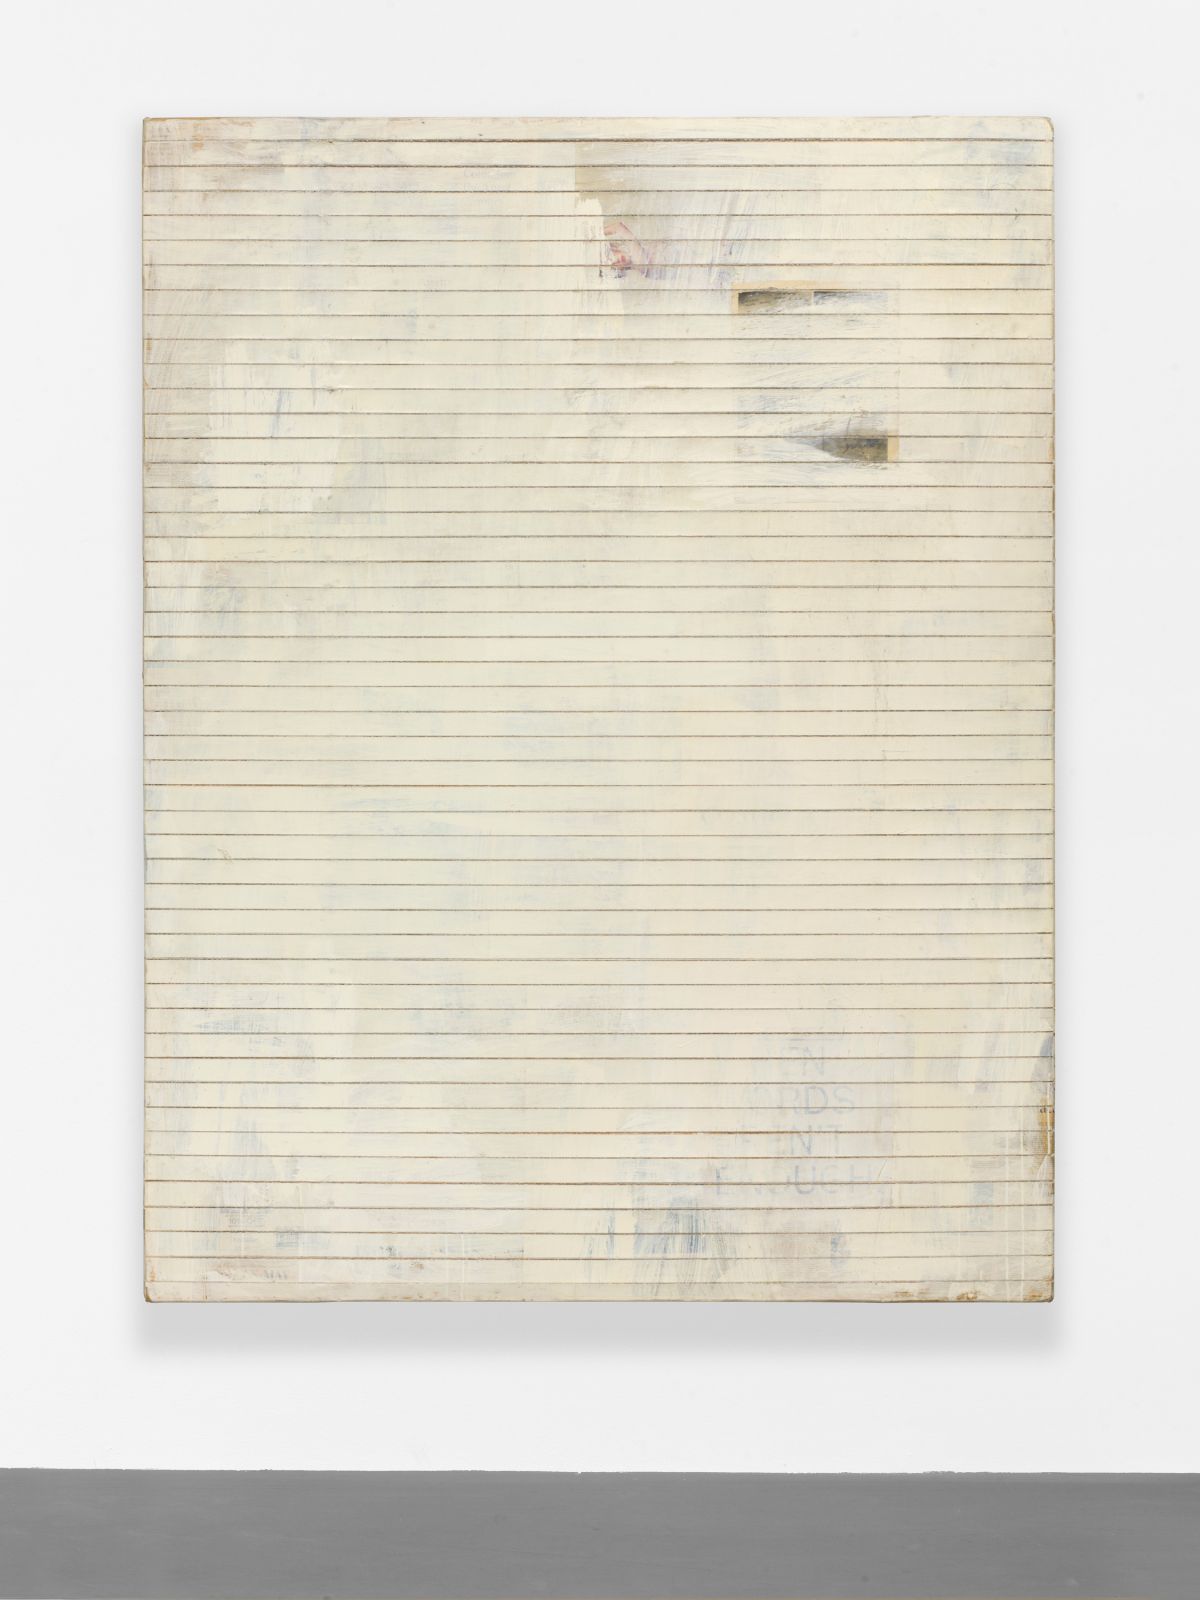 Lawrence Carroll, ‘Untitled (cut painting, white)’, 2016, Öl, Wachs, Wandfarbe, Zeitungspapier, Heftklammern, Leinwand auf Holz